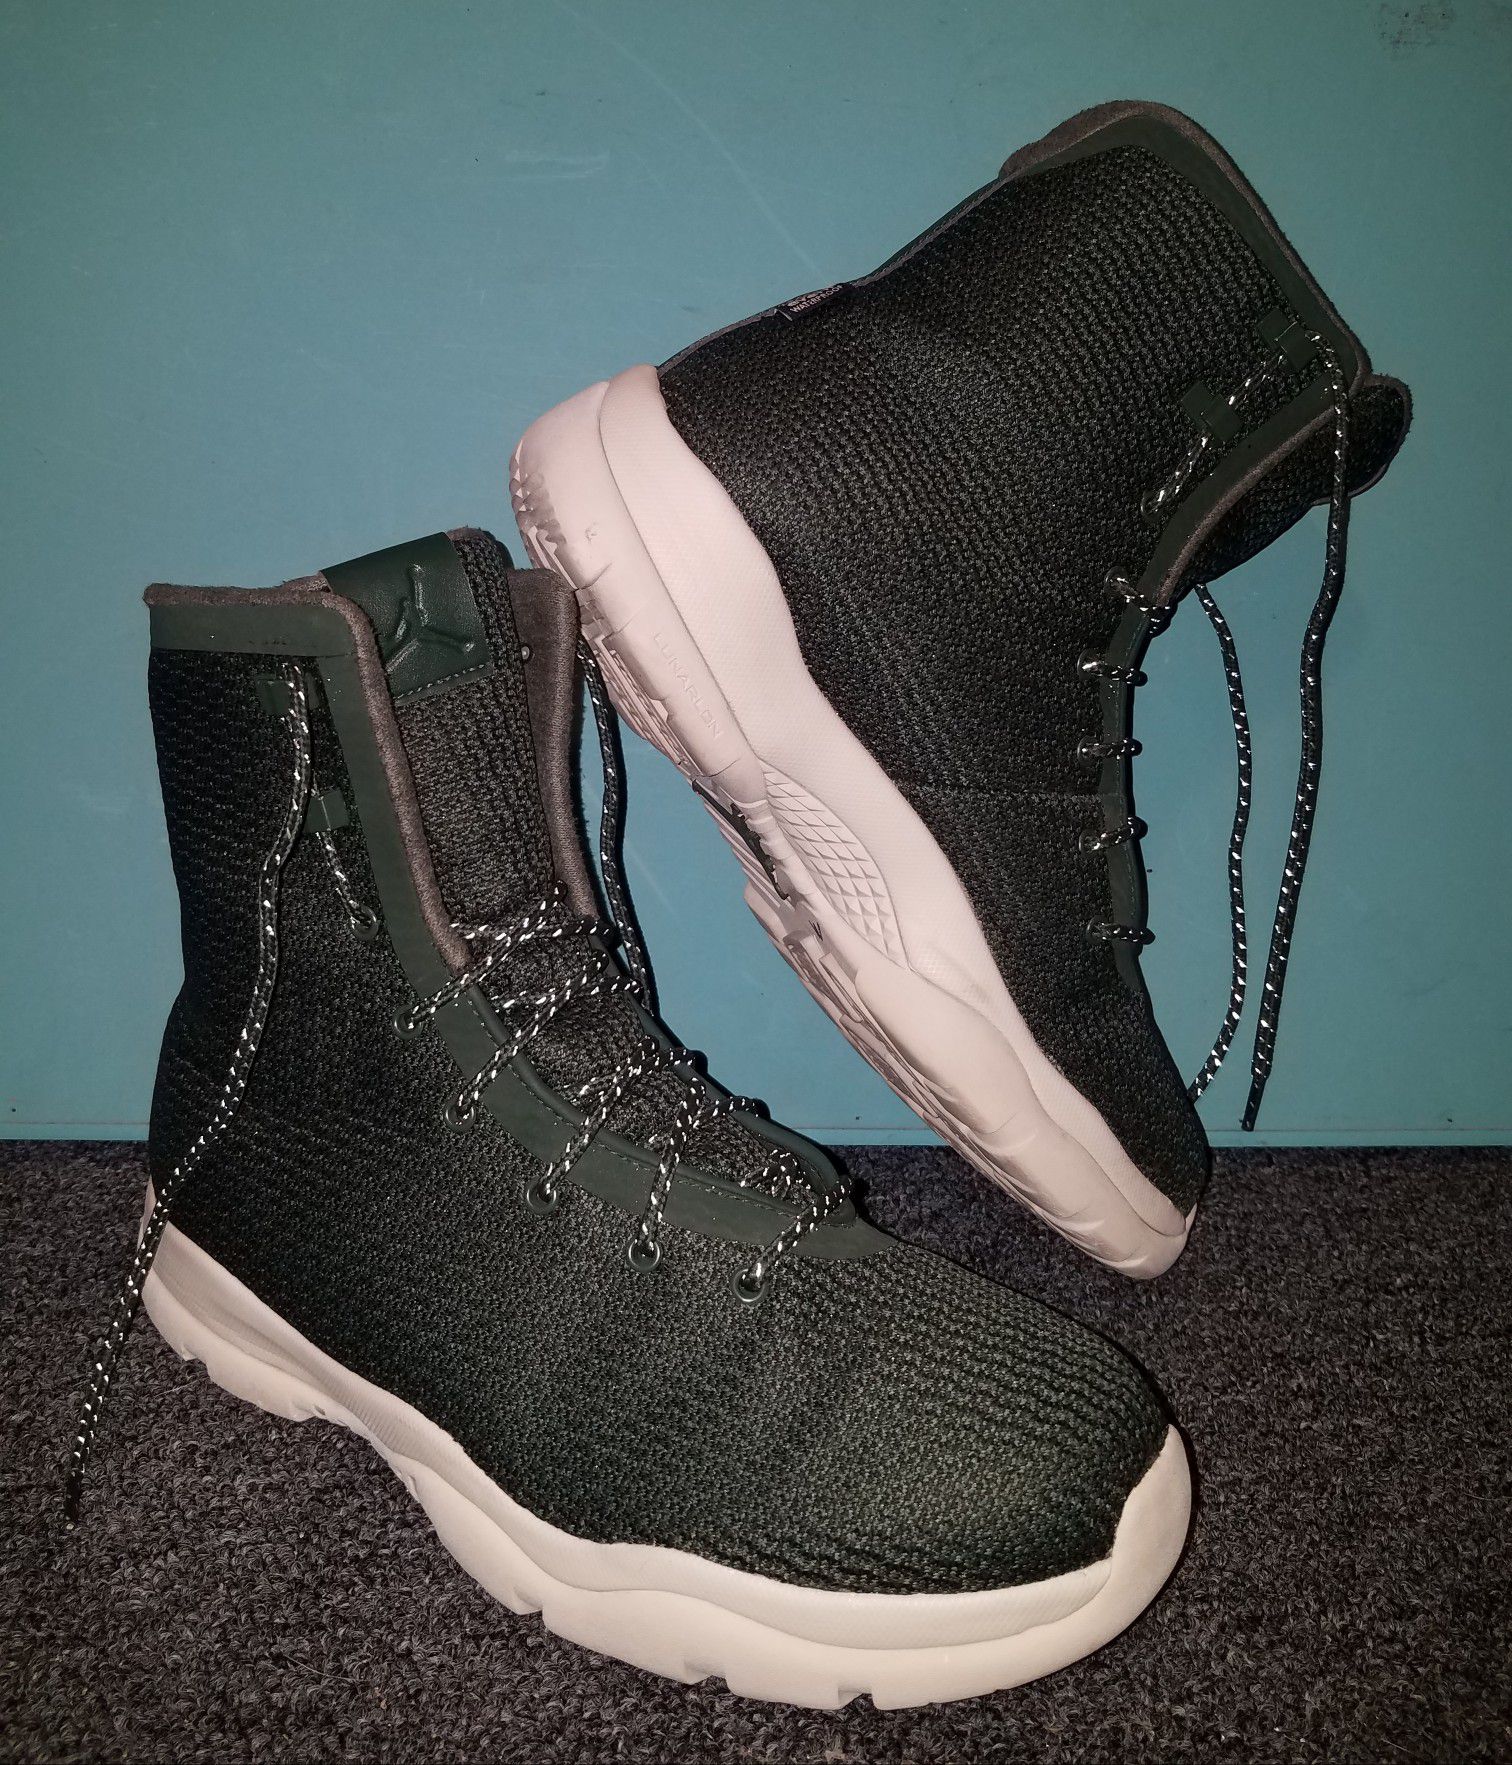 Nike Air Jordan Future Boot Grove Green Mens Outdoor Winter Sneakers Size 11.5